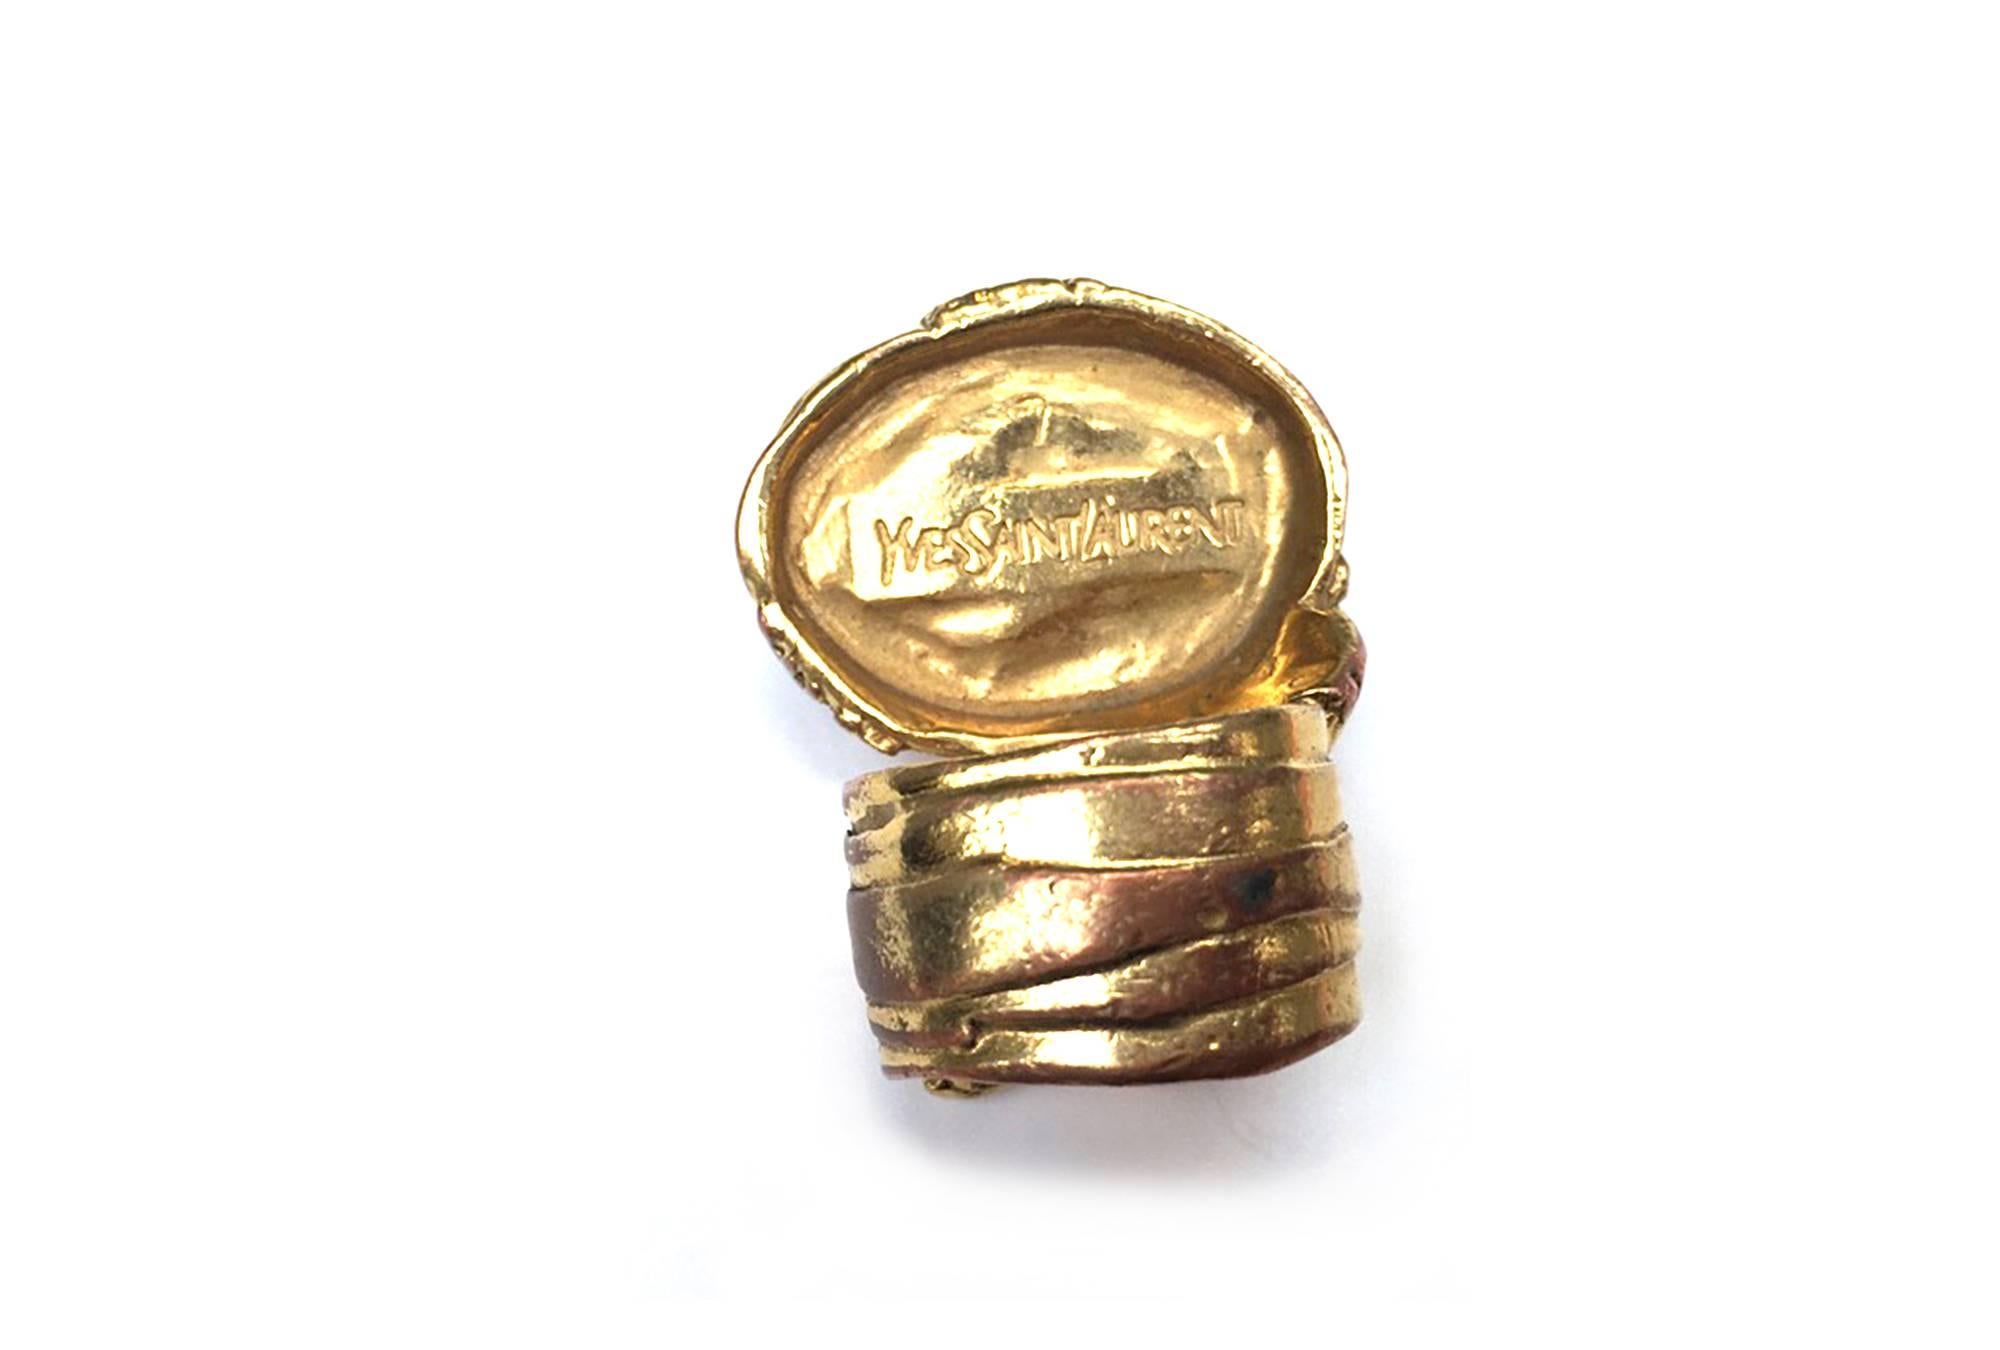 Yves Saint Laurent by Stefano Pilati gold ring w. turquios stone, Sz 9 3